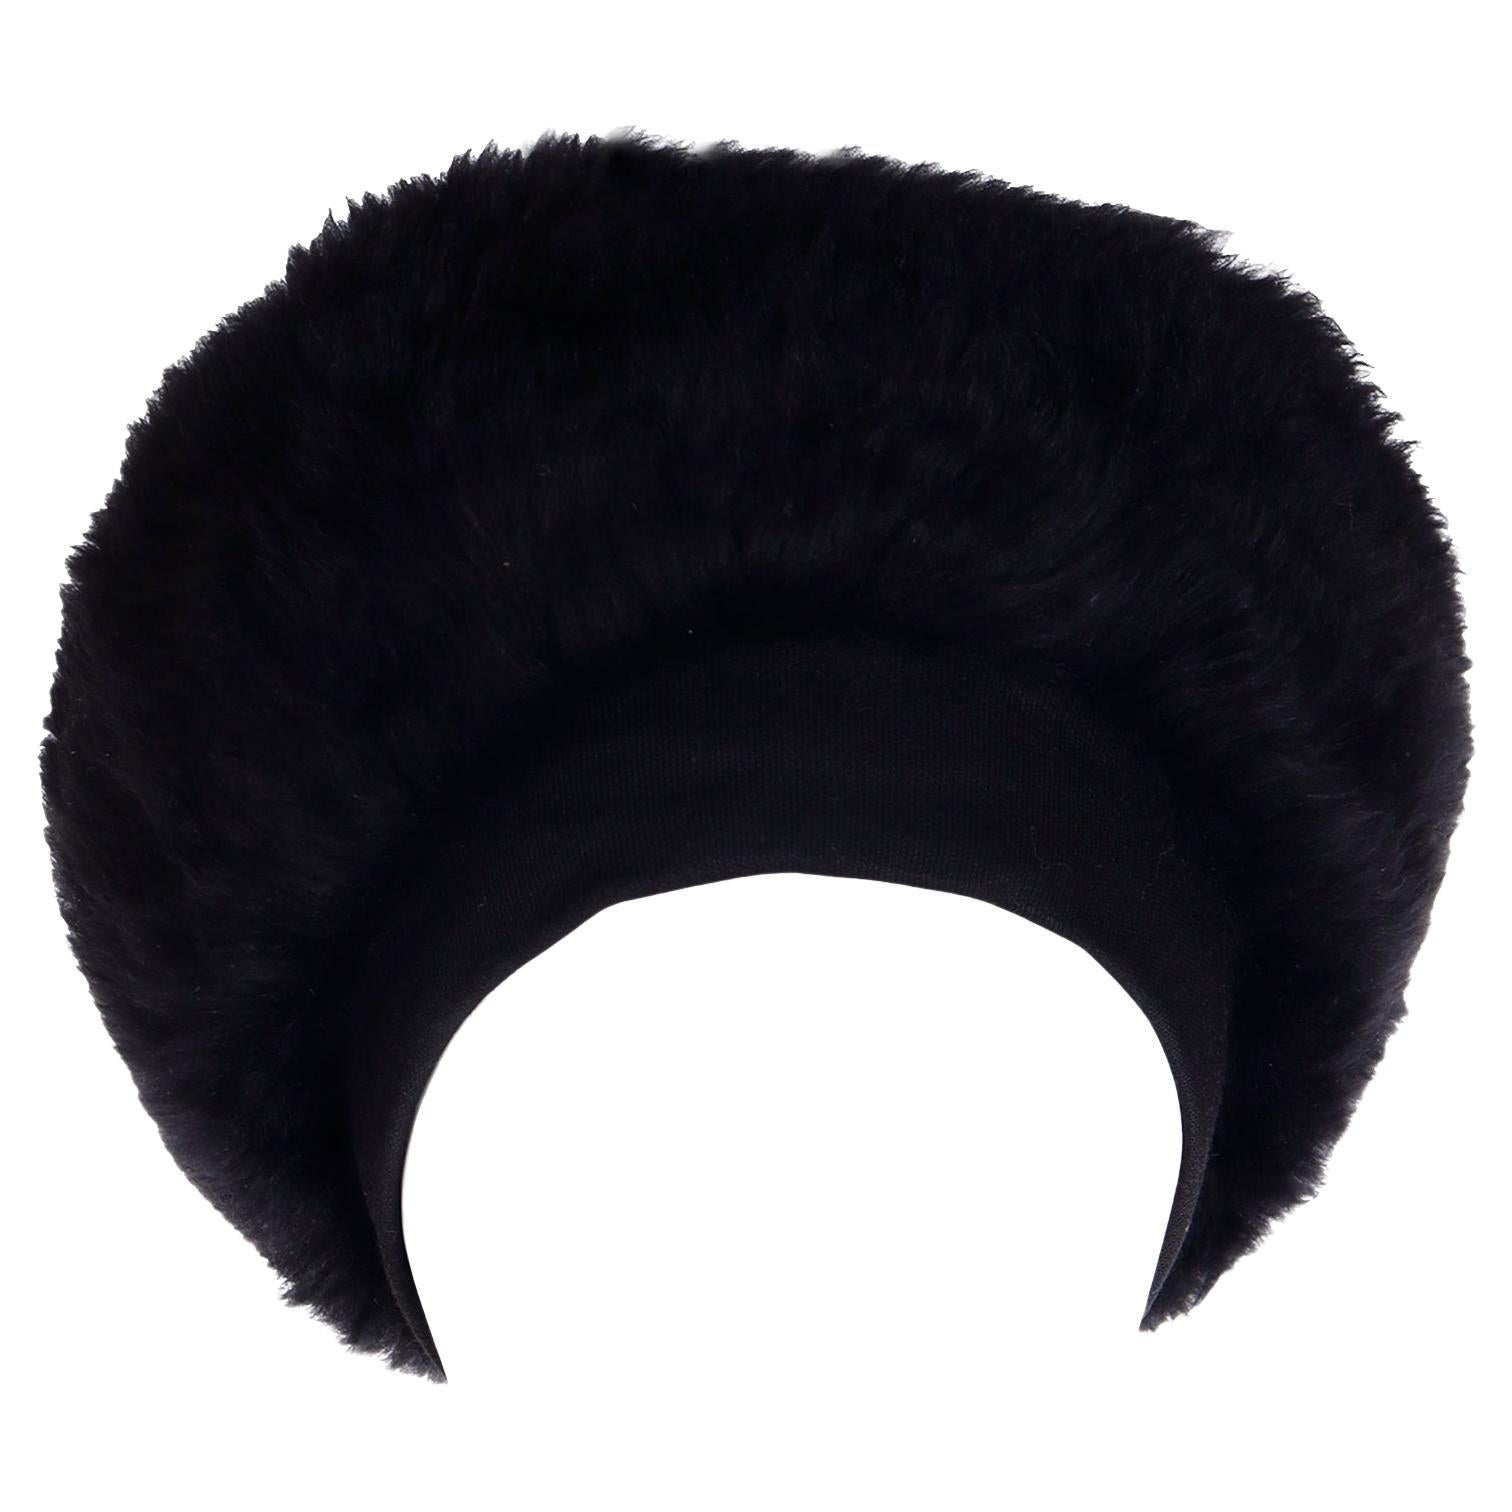 Yves Saint Laurent 1970s Russian inspired Vintage Black Fur Hat For Sale